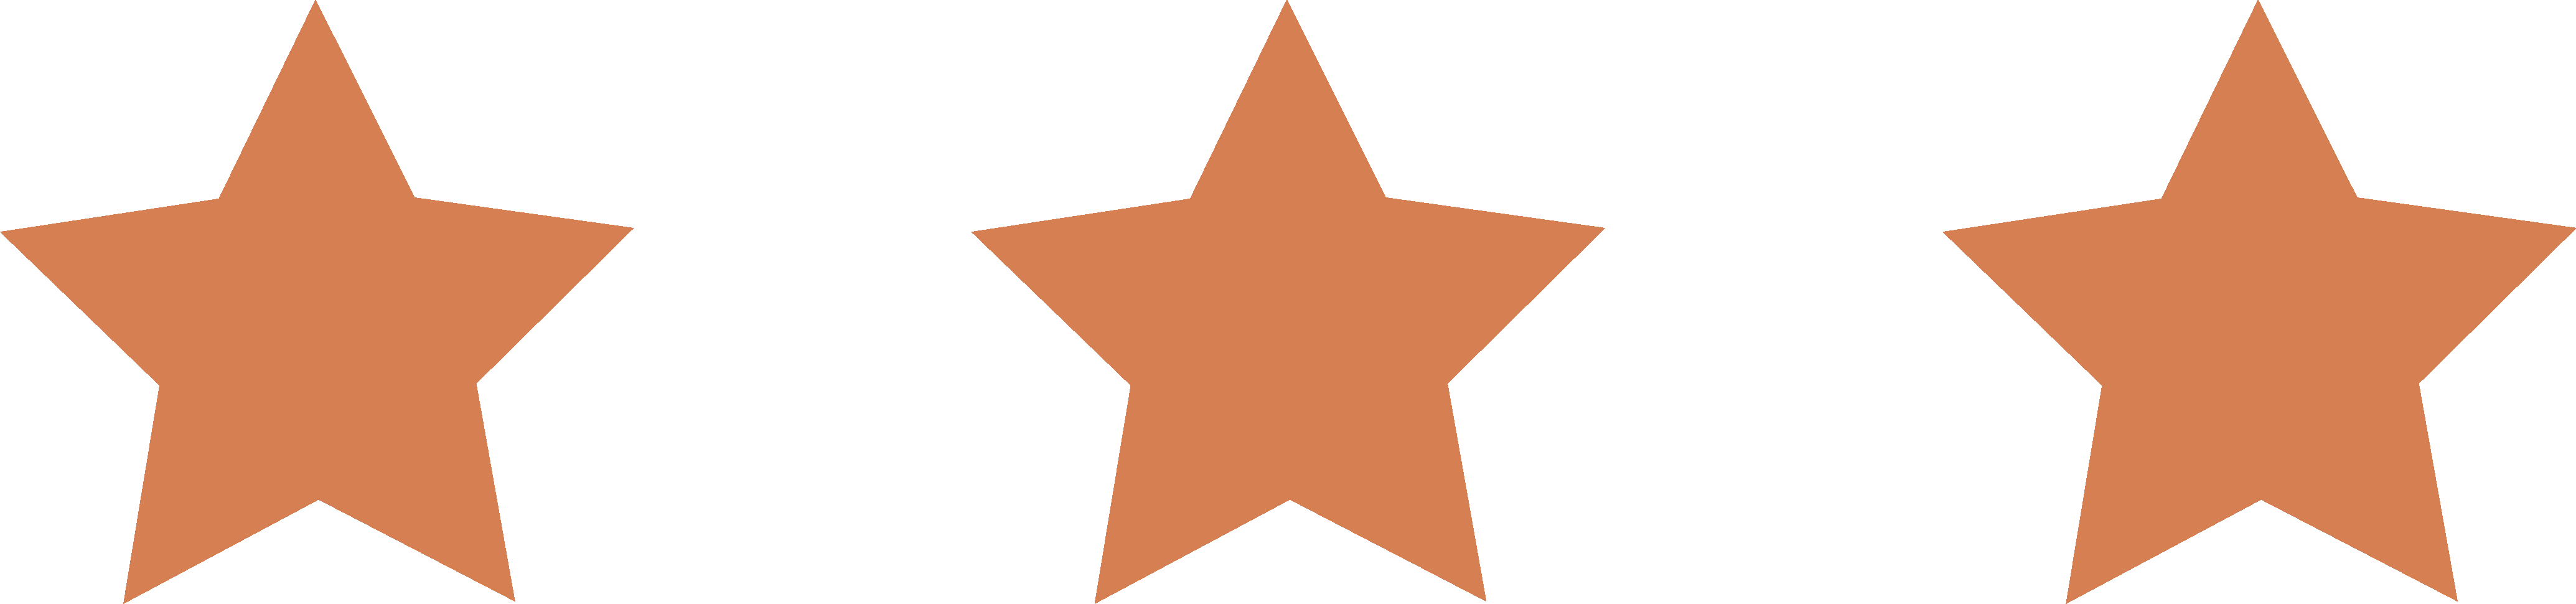 three star_orange